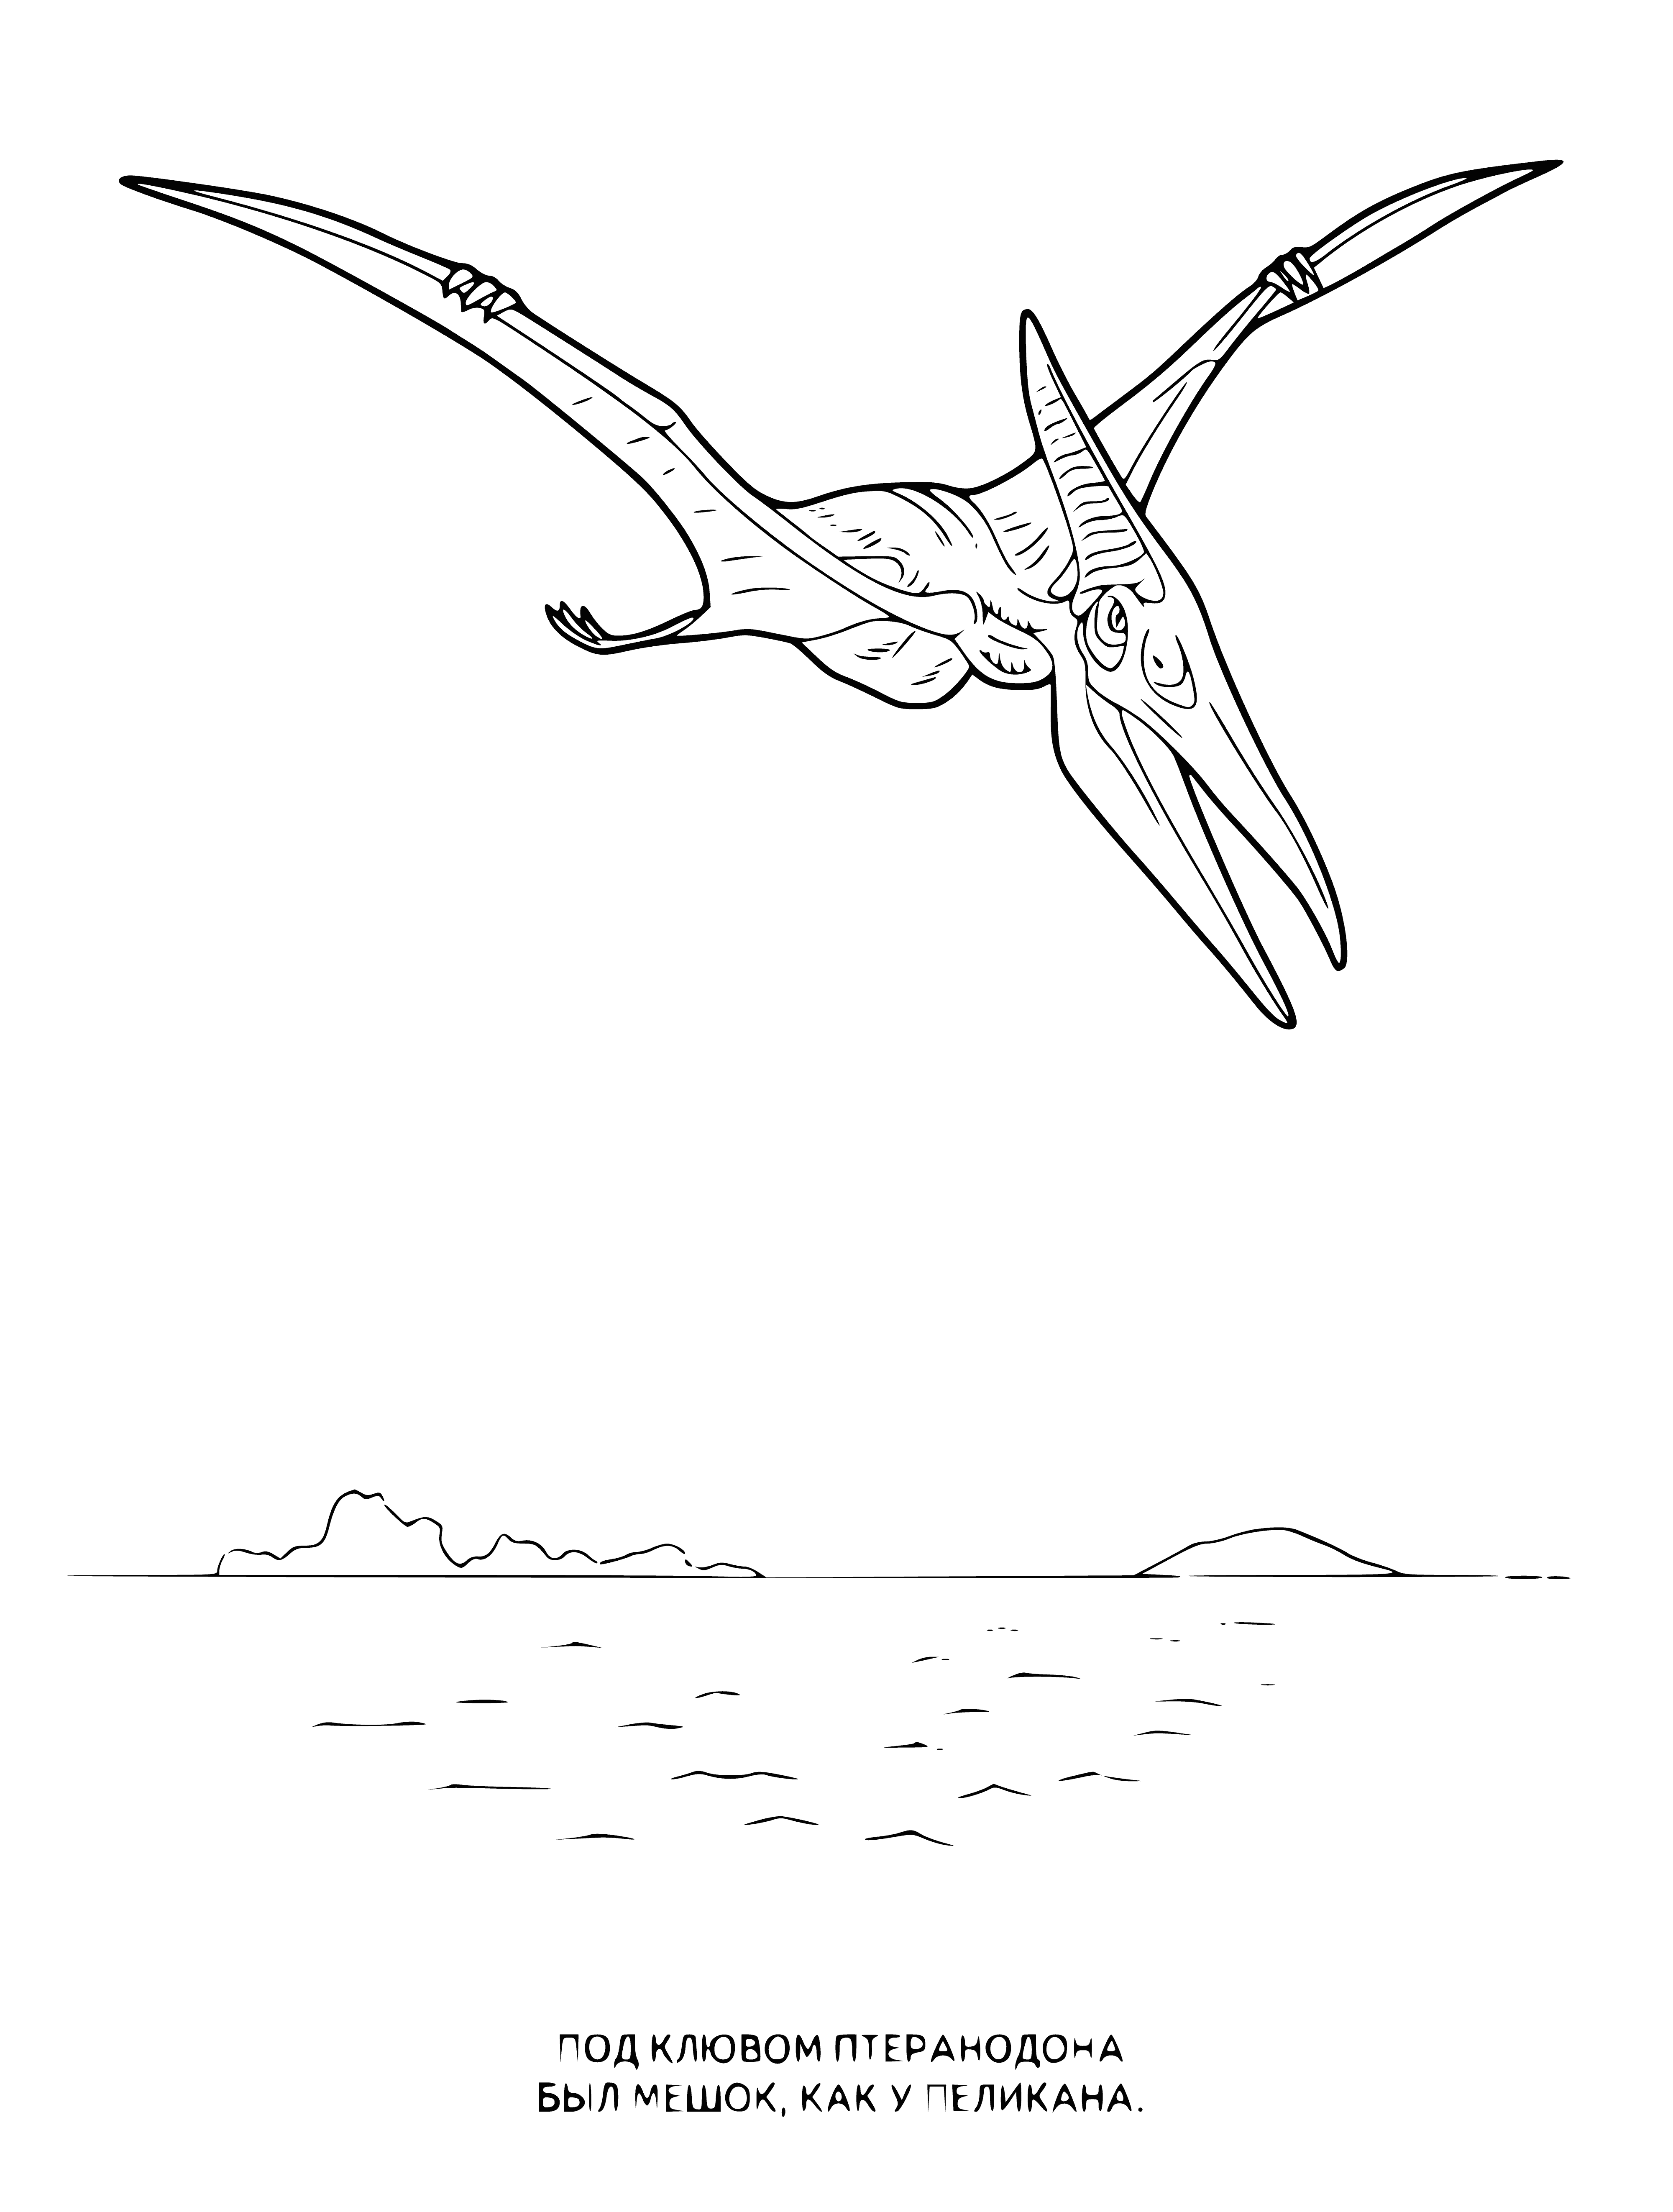 coloring page: A flying reptile w/long beak & neck, two legs, wings w/membrane, & long tail w/membrane at end.